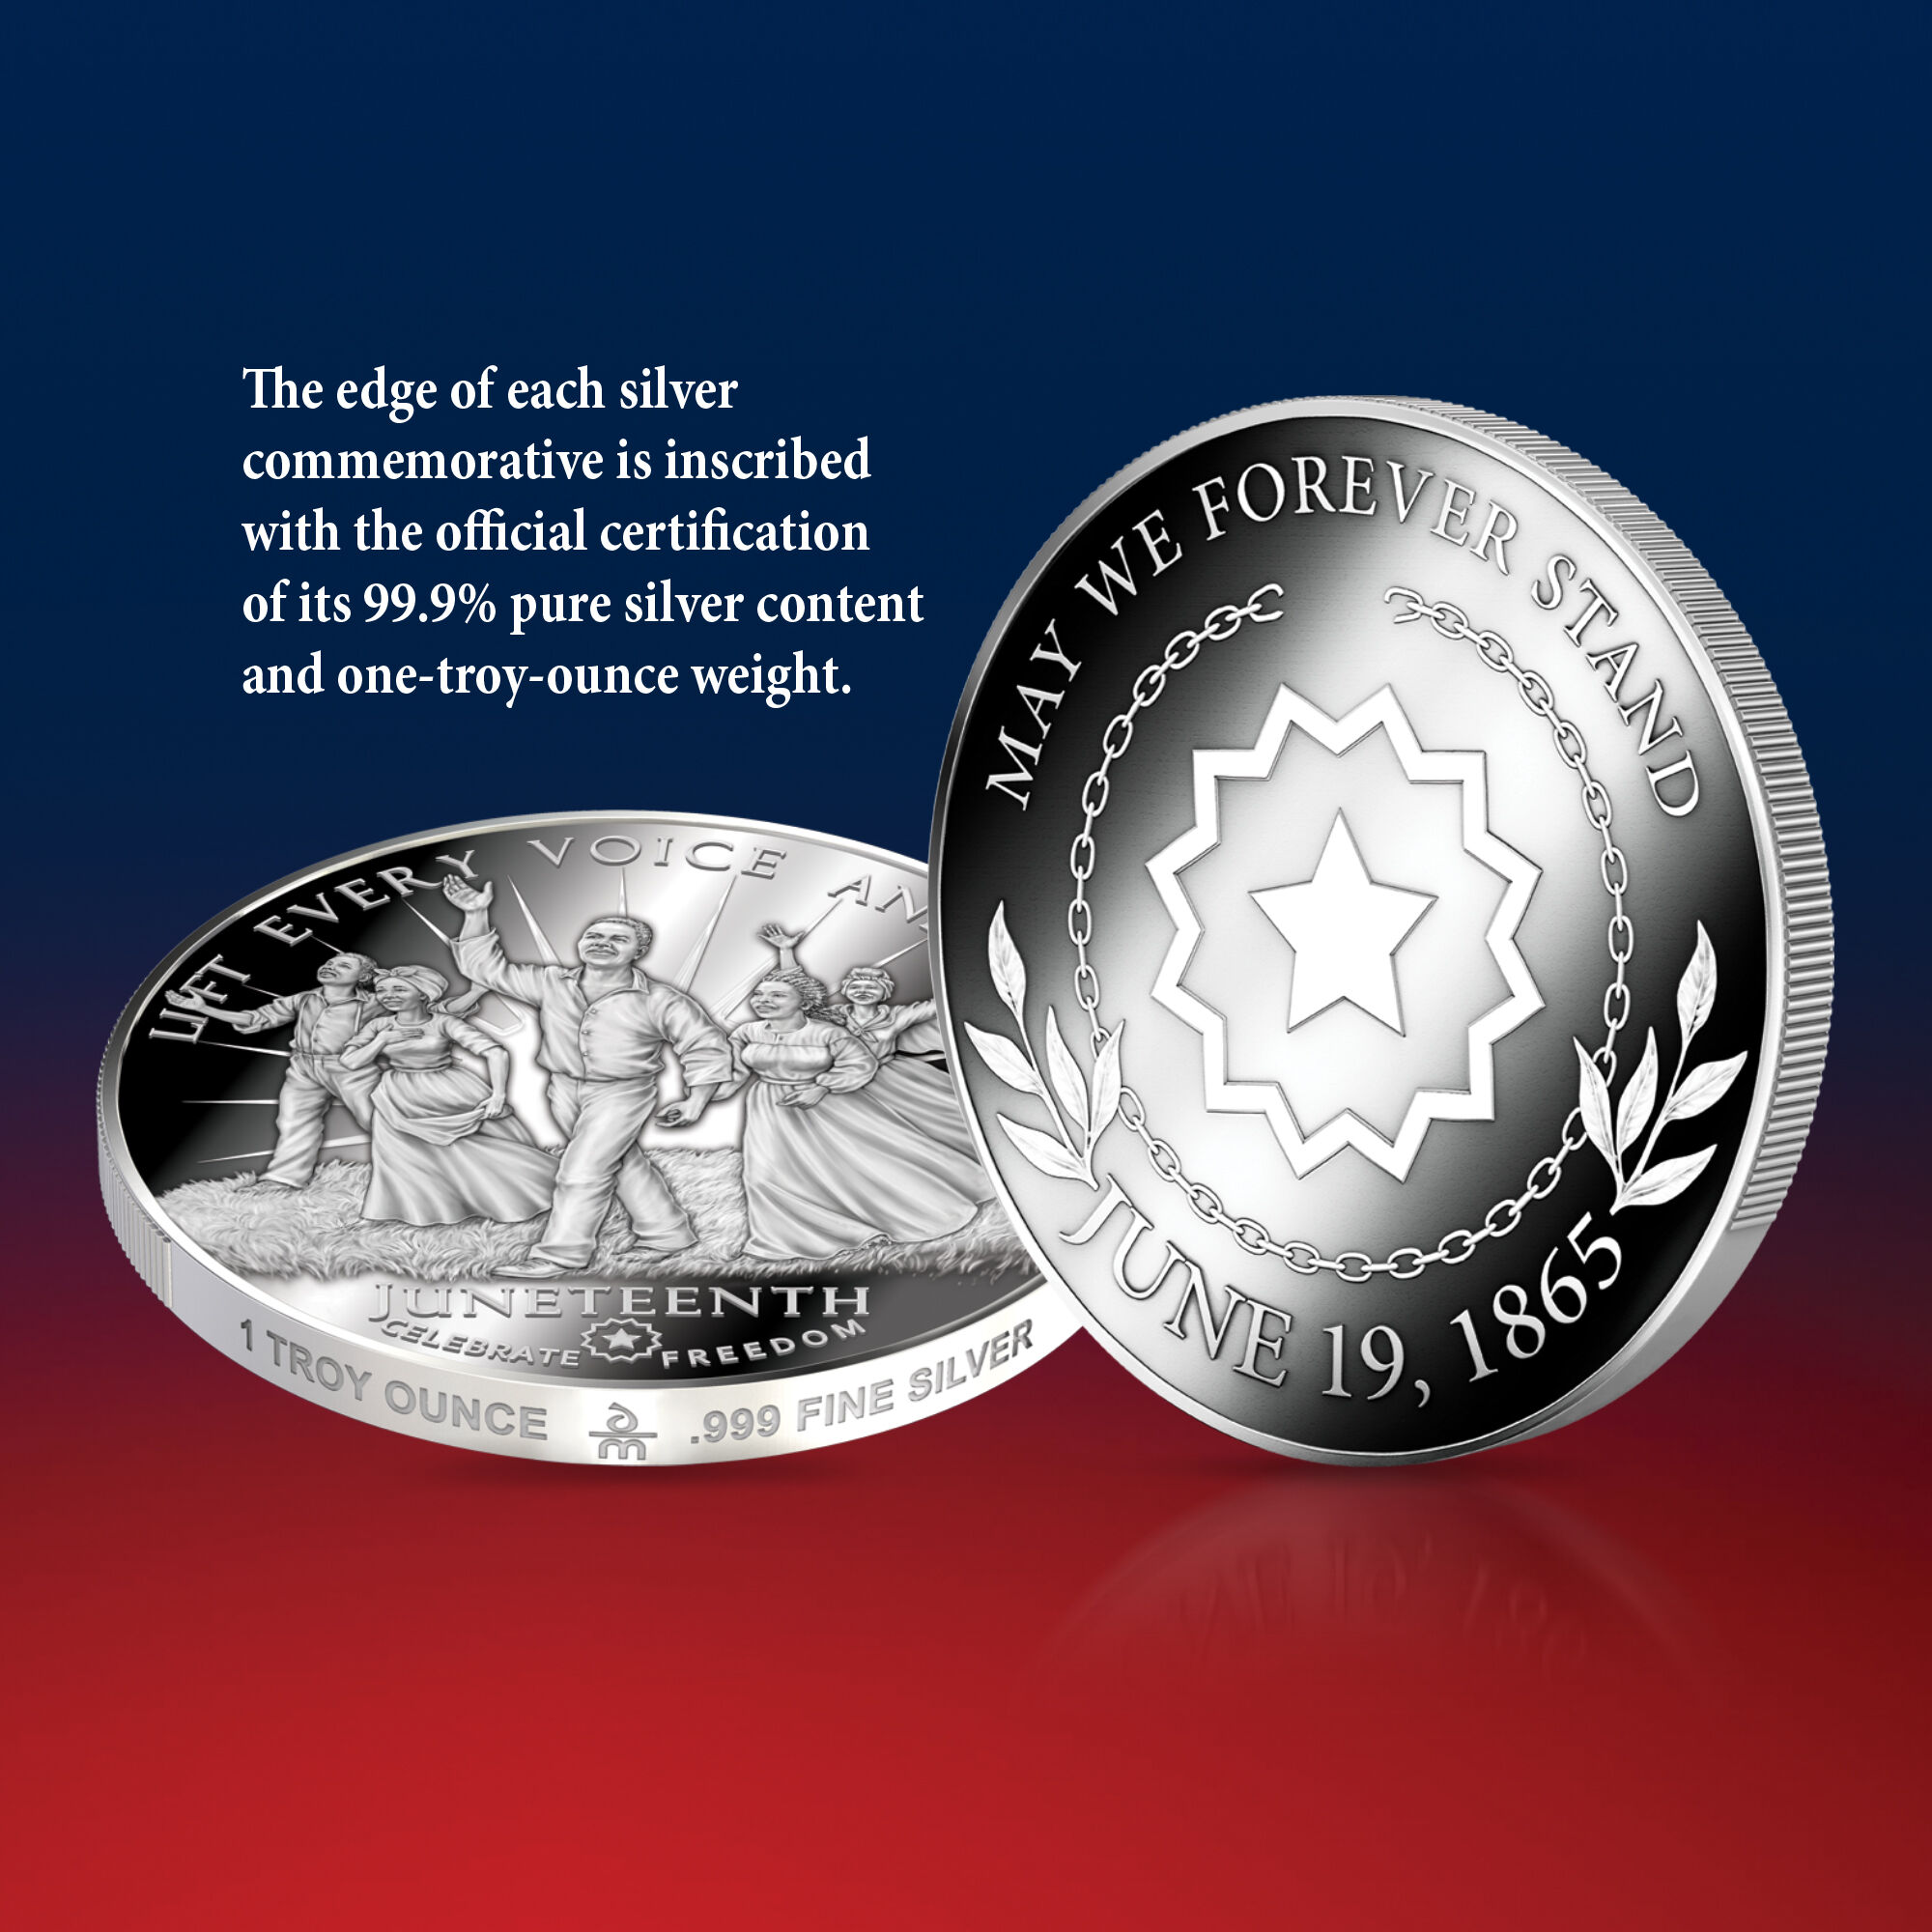 Juneteenth Silver Bullion Commemorative 10849 0012 c coin